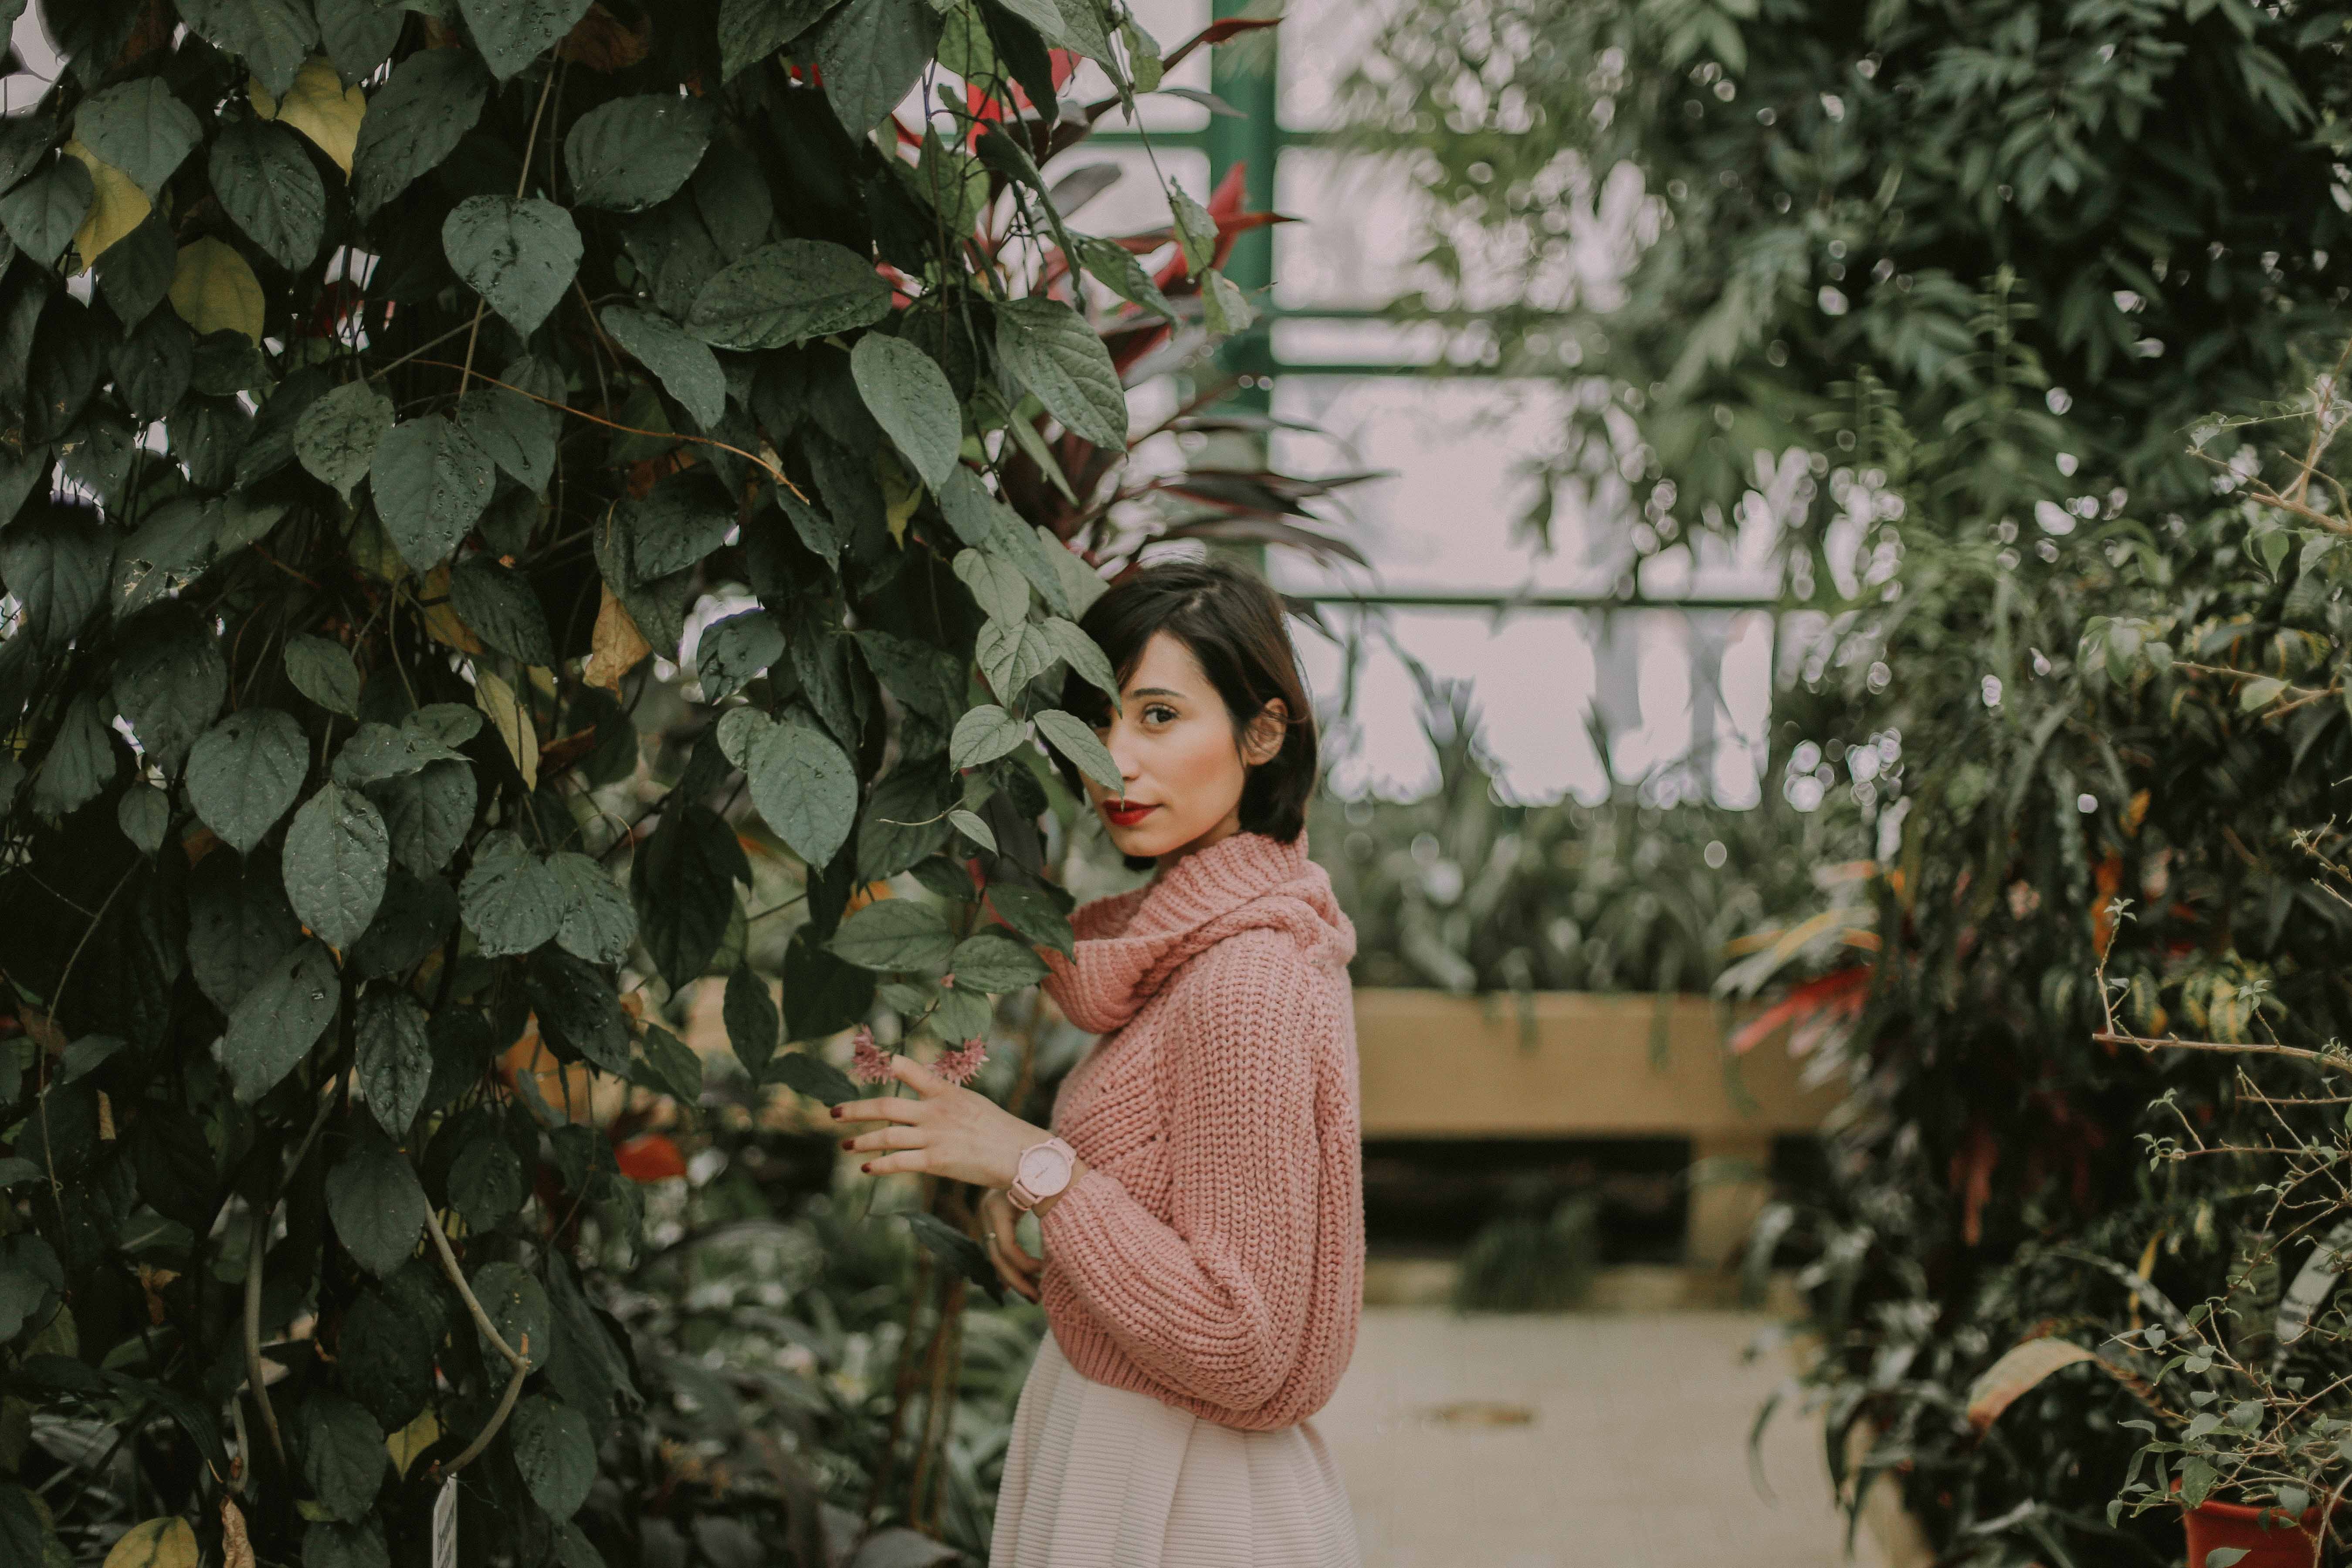 woman wearing pink knitted long sleeve top near green plants